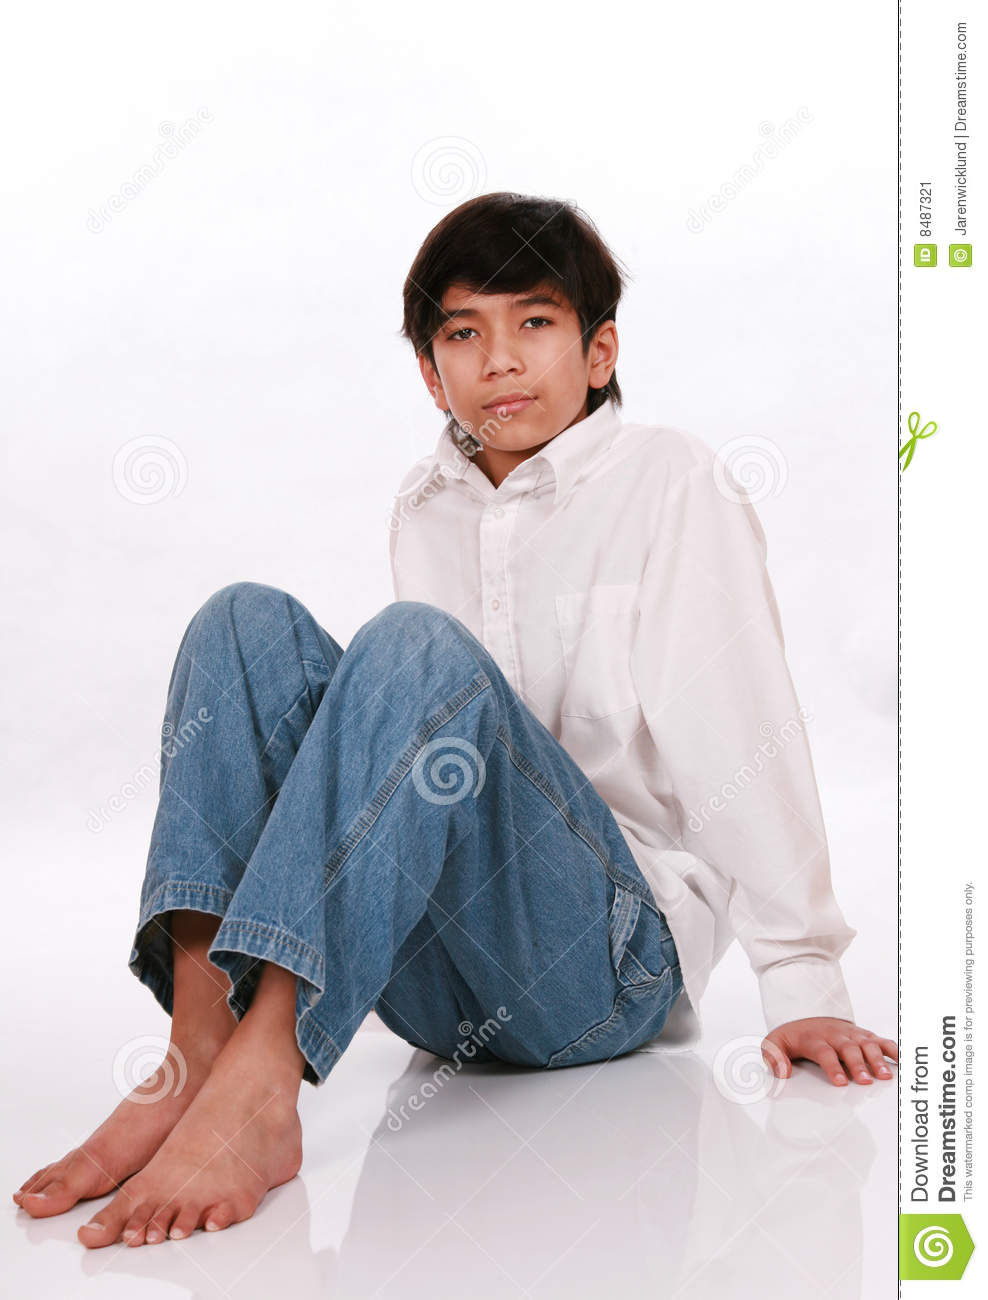 Twelve Year Old Boy Sitting On Floor Stock Image   Image  8487321